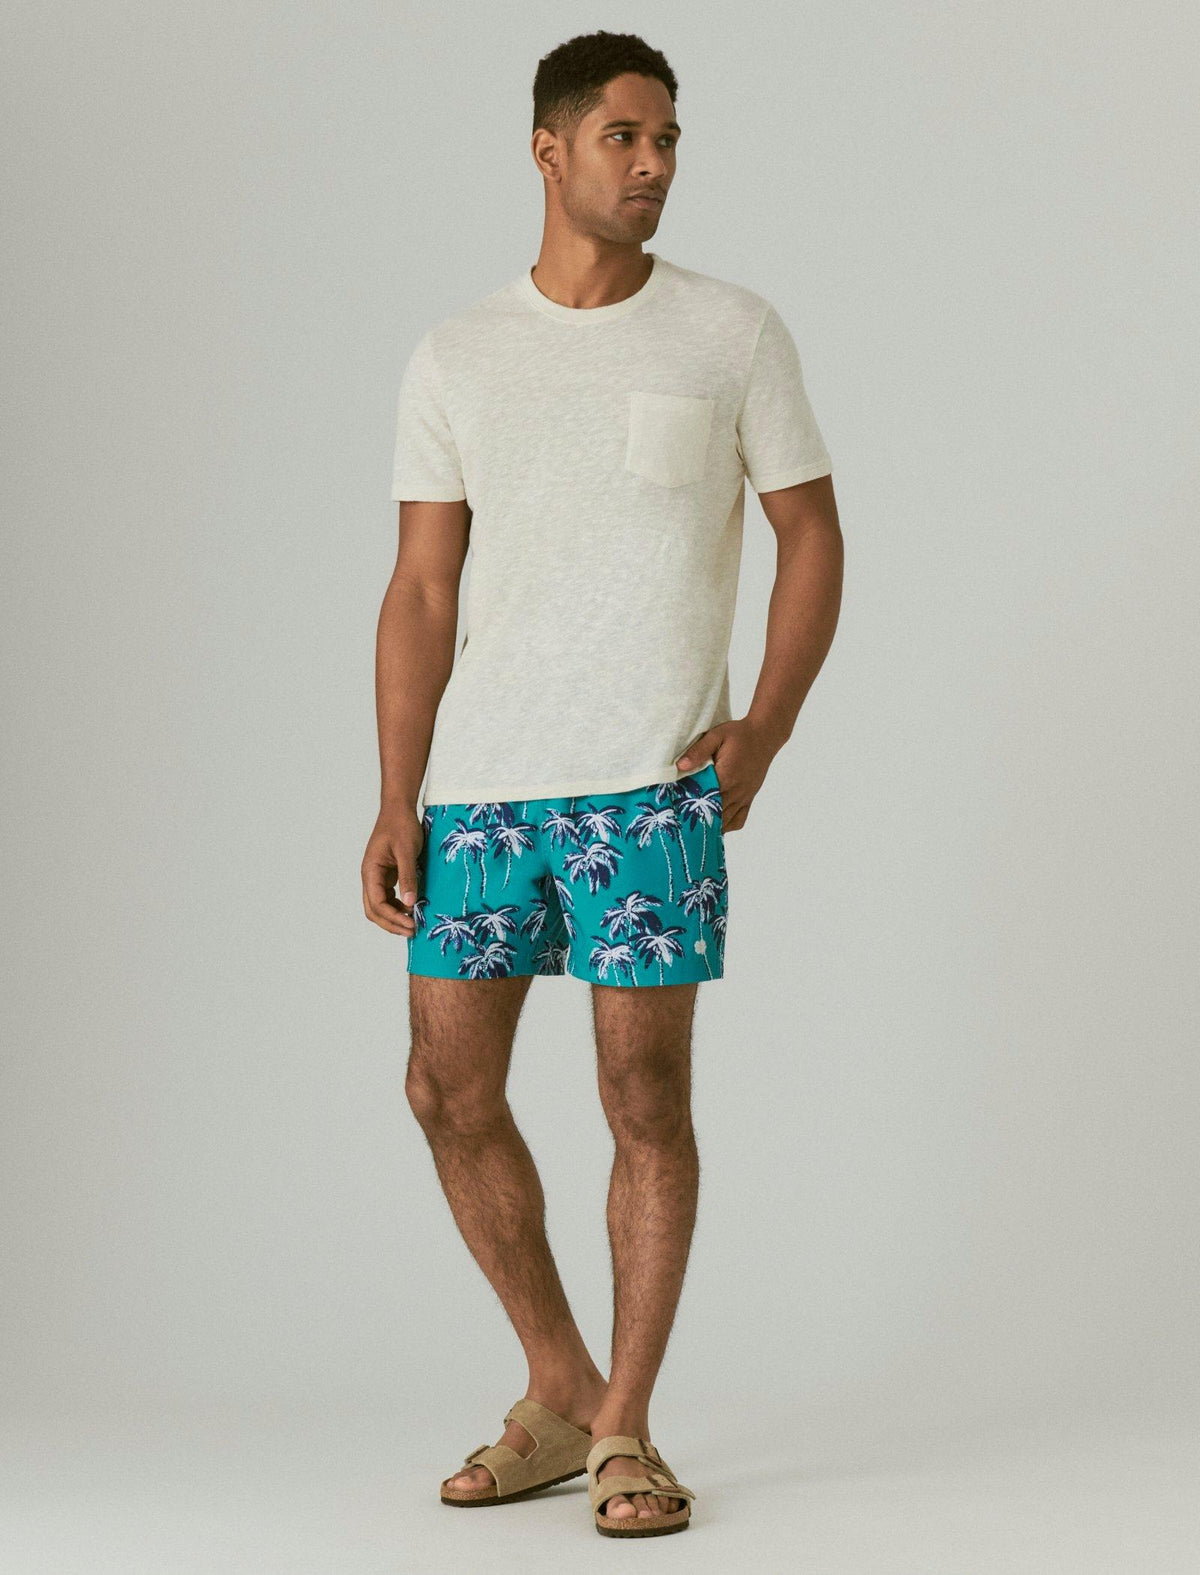 Lucky Brand 6" Stretch Swim Short - Men's Shorts Denim Jean Turquoise Print